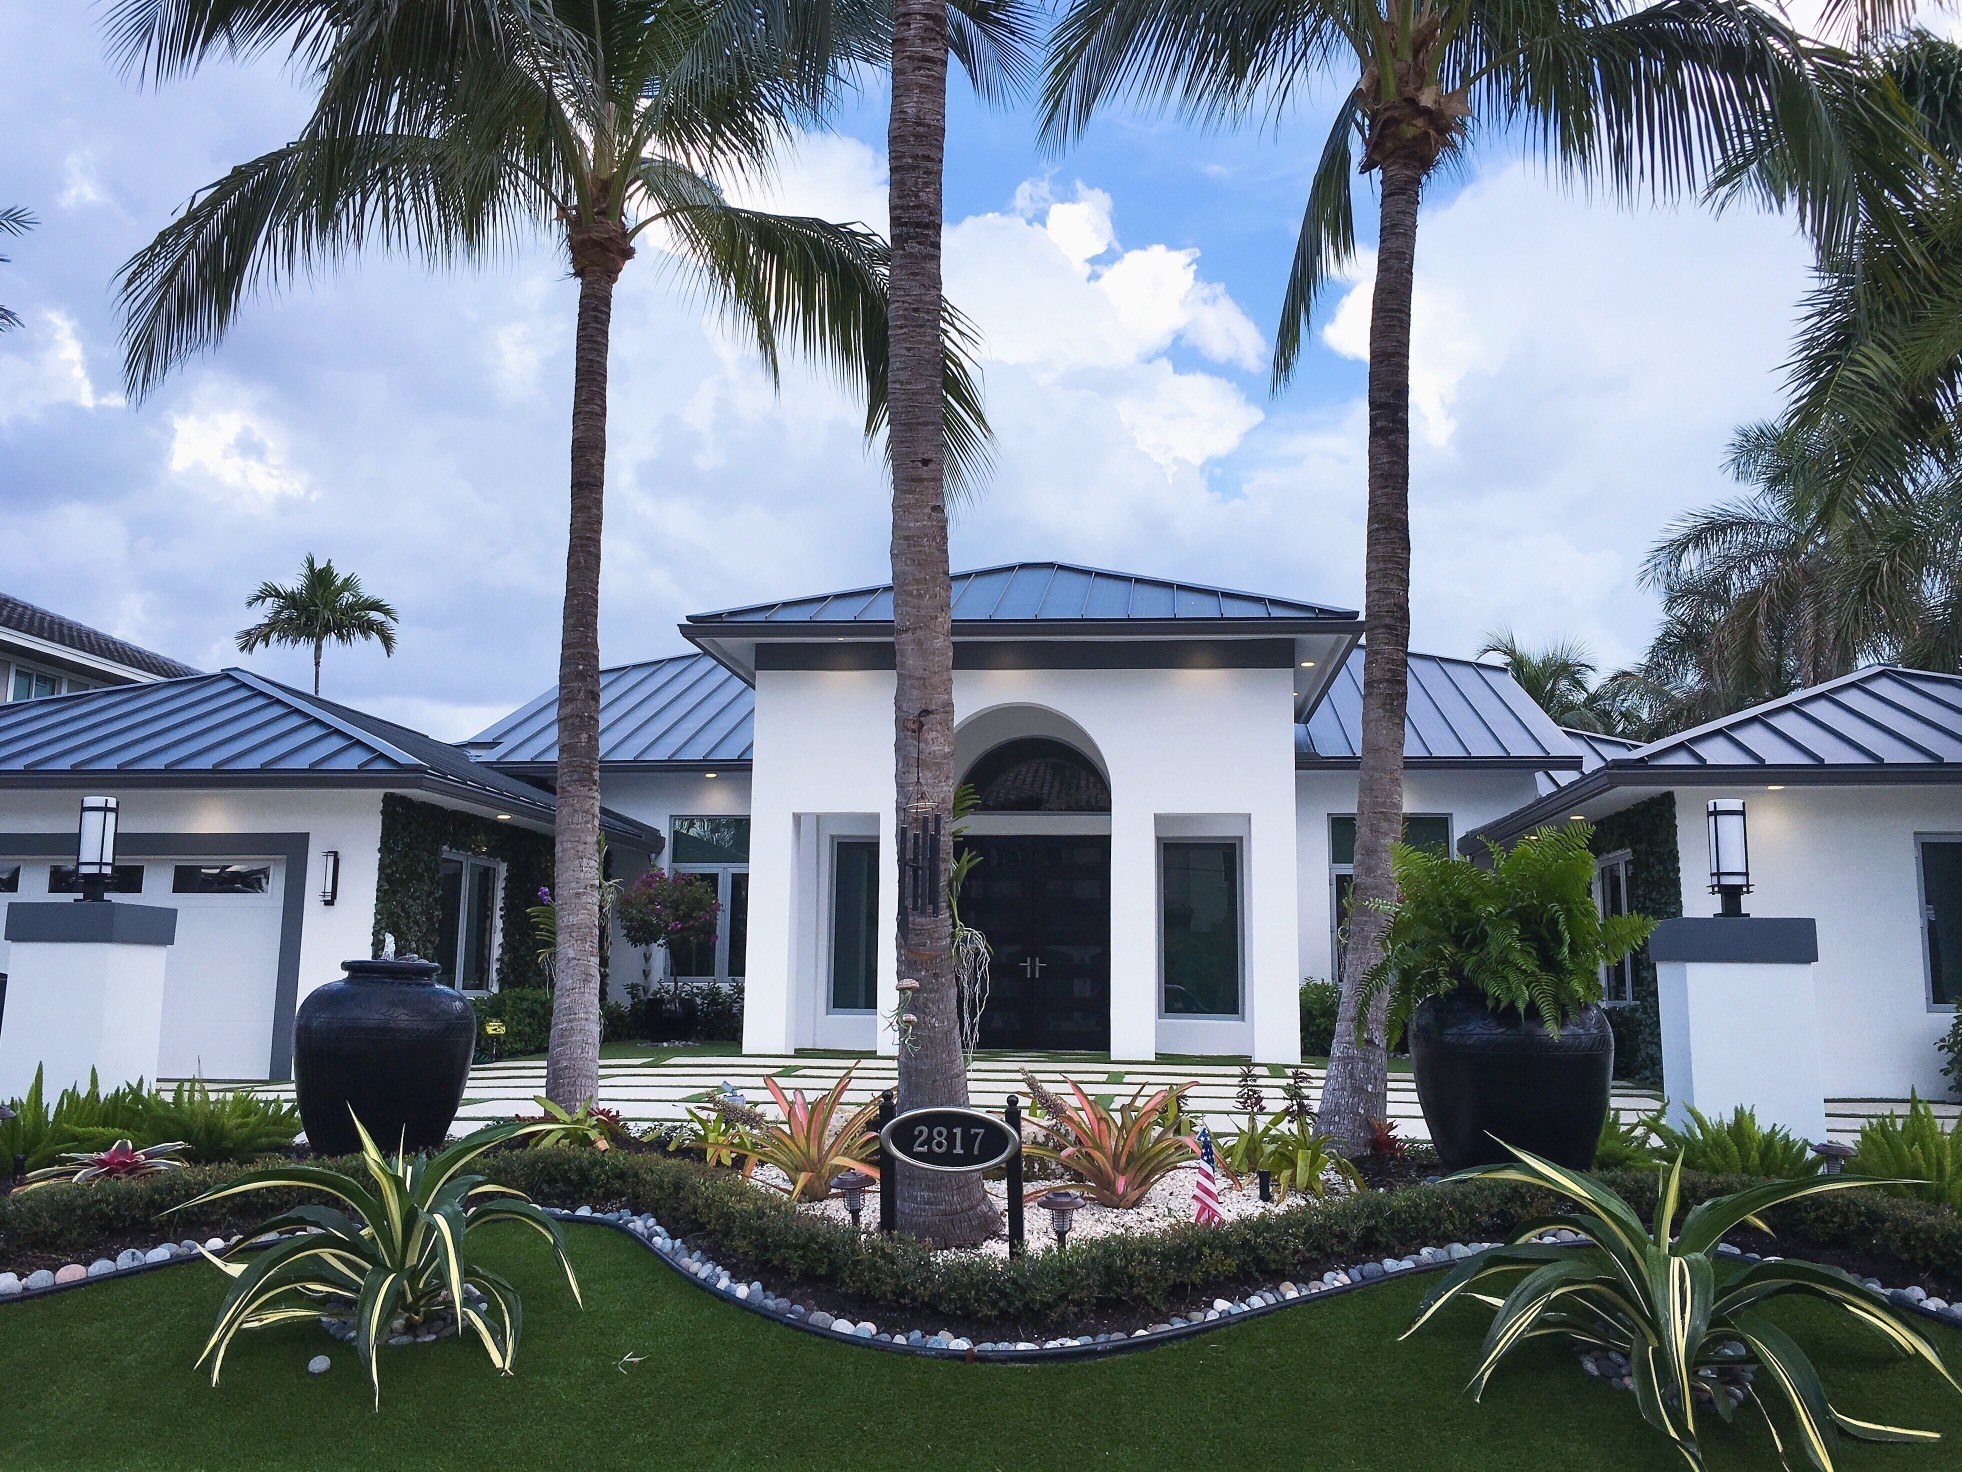 Luxury exterior with palms